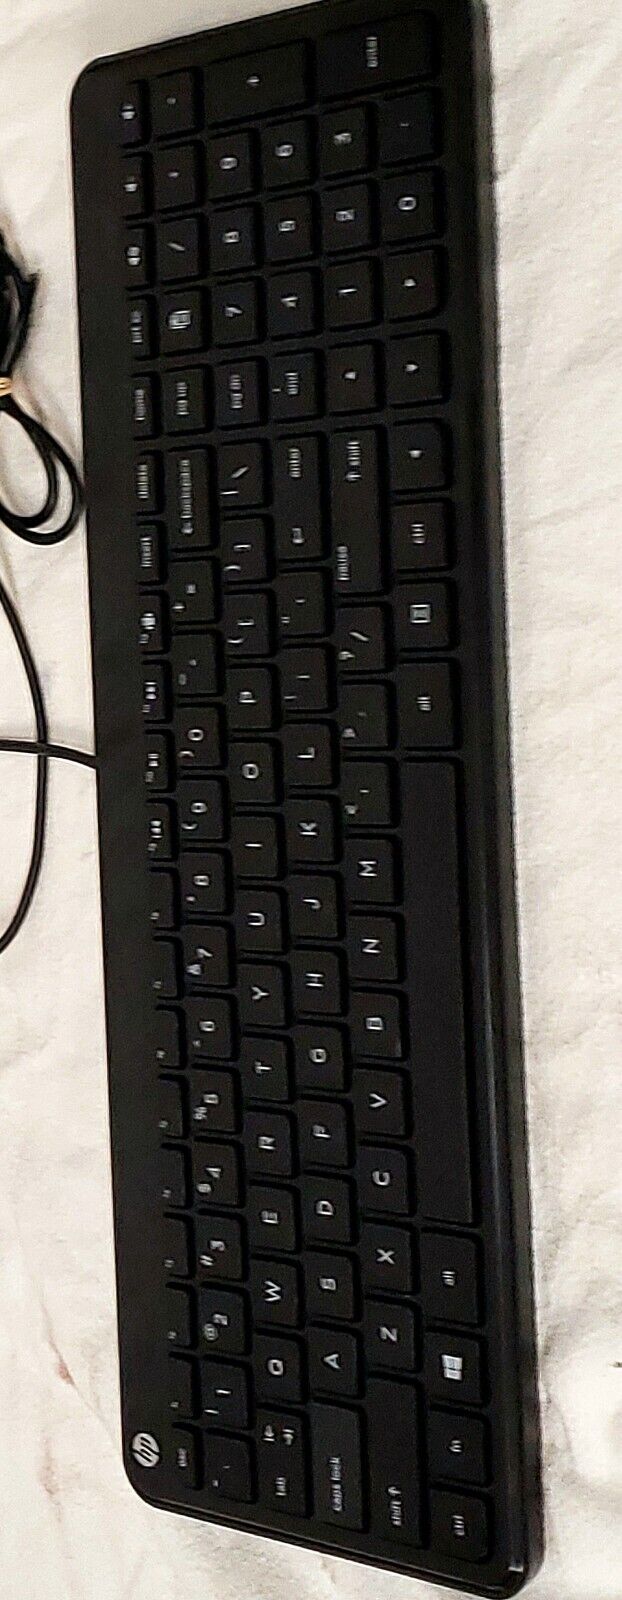 Genuine HP Slim Keyboard SK-2028 USB Wired Keyboard  Only